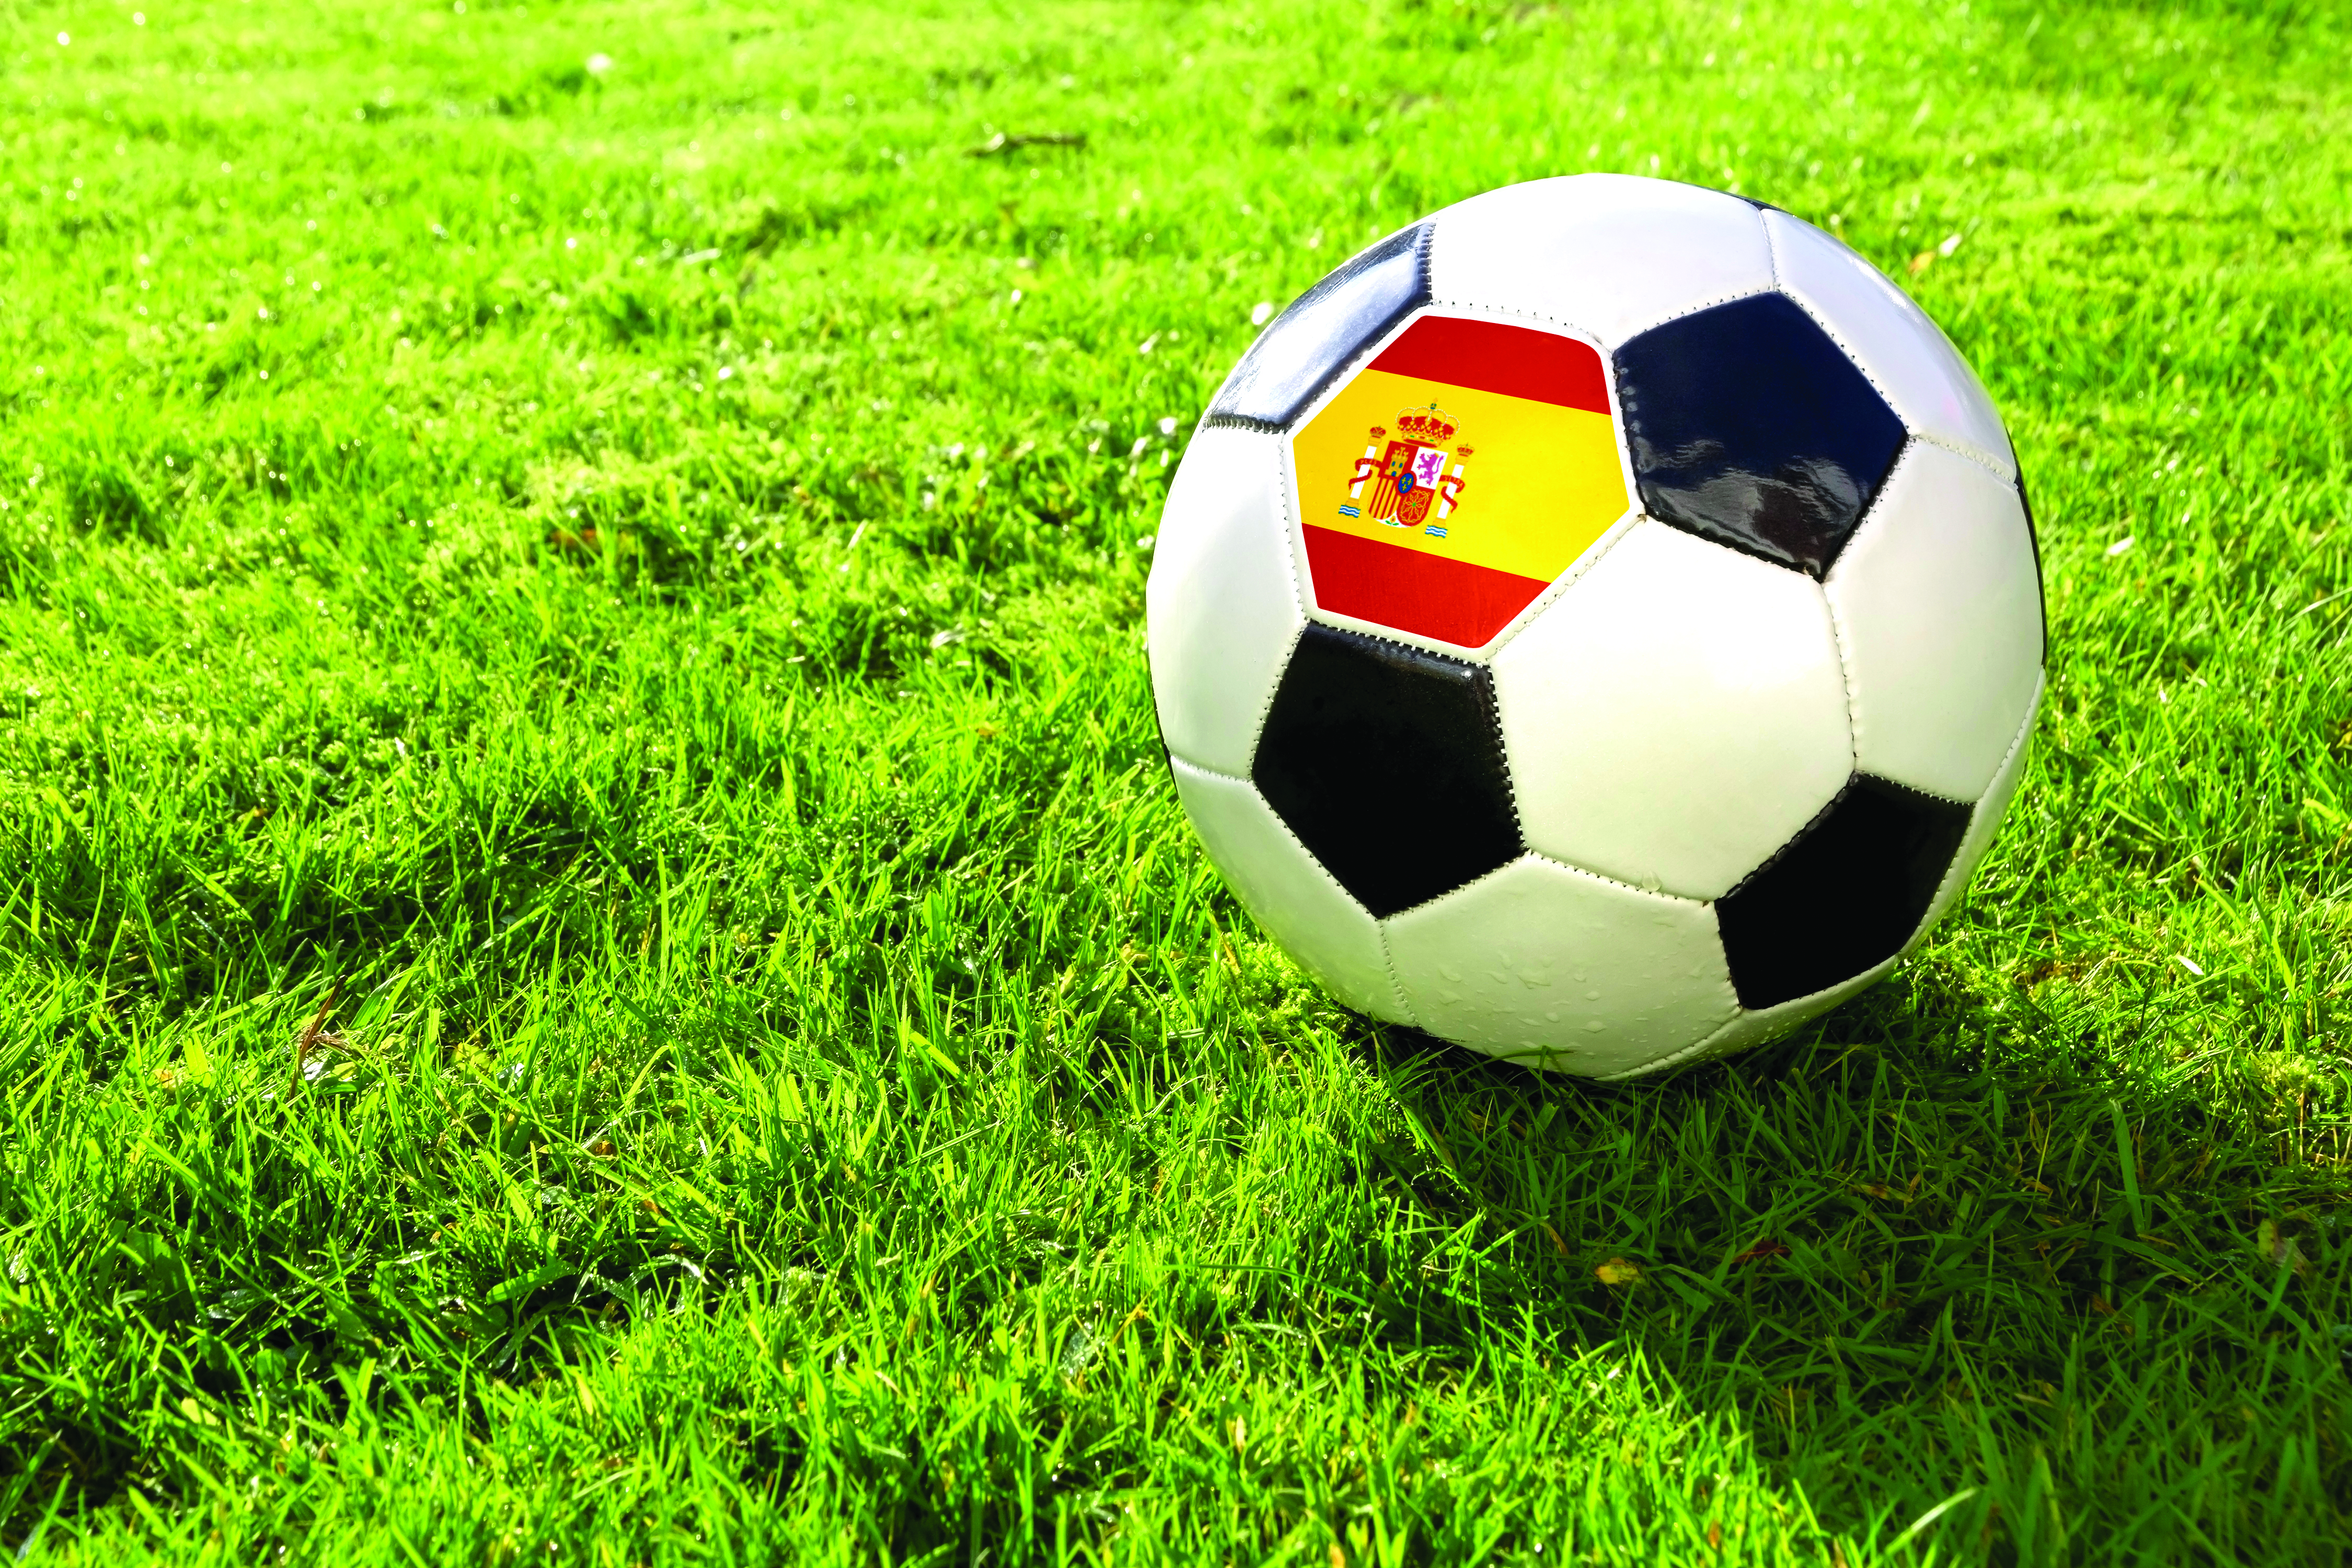 a soccer ball on a field